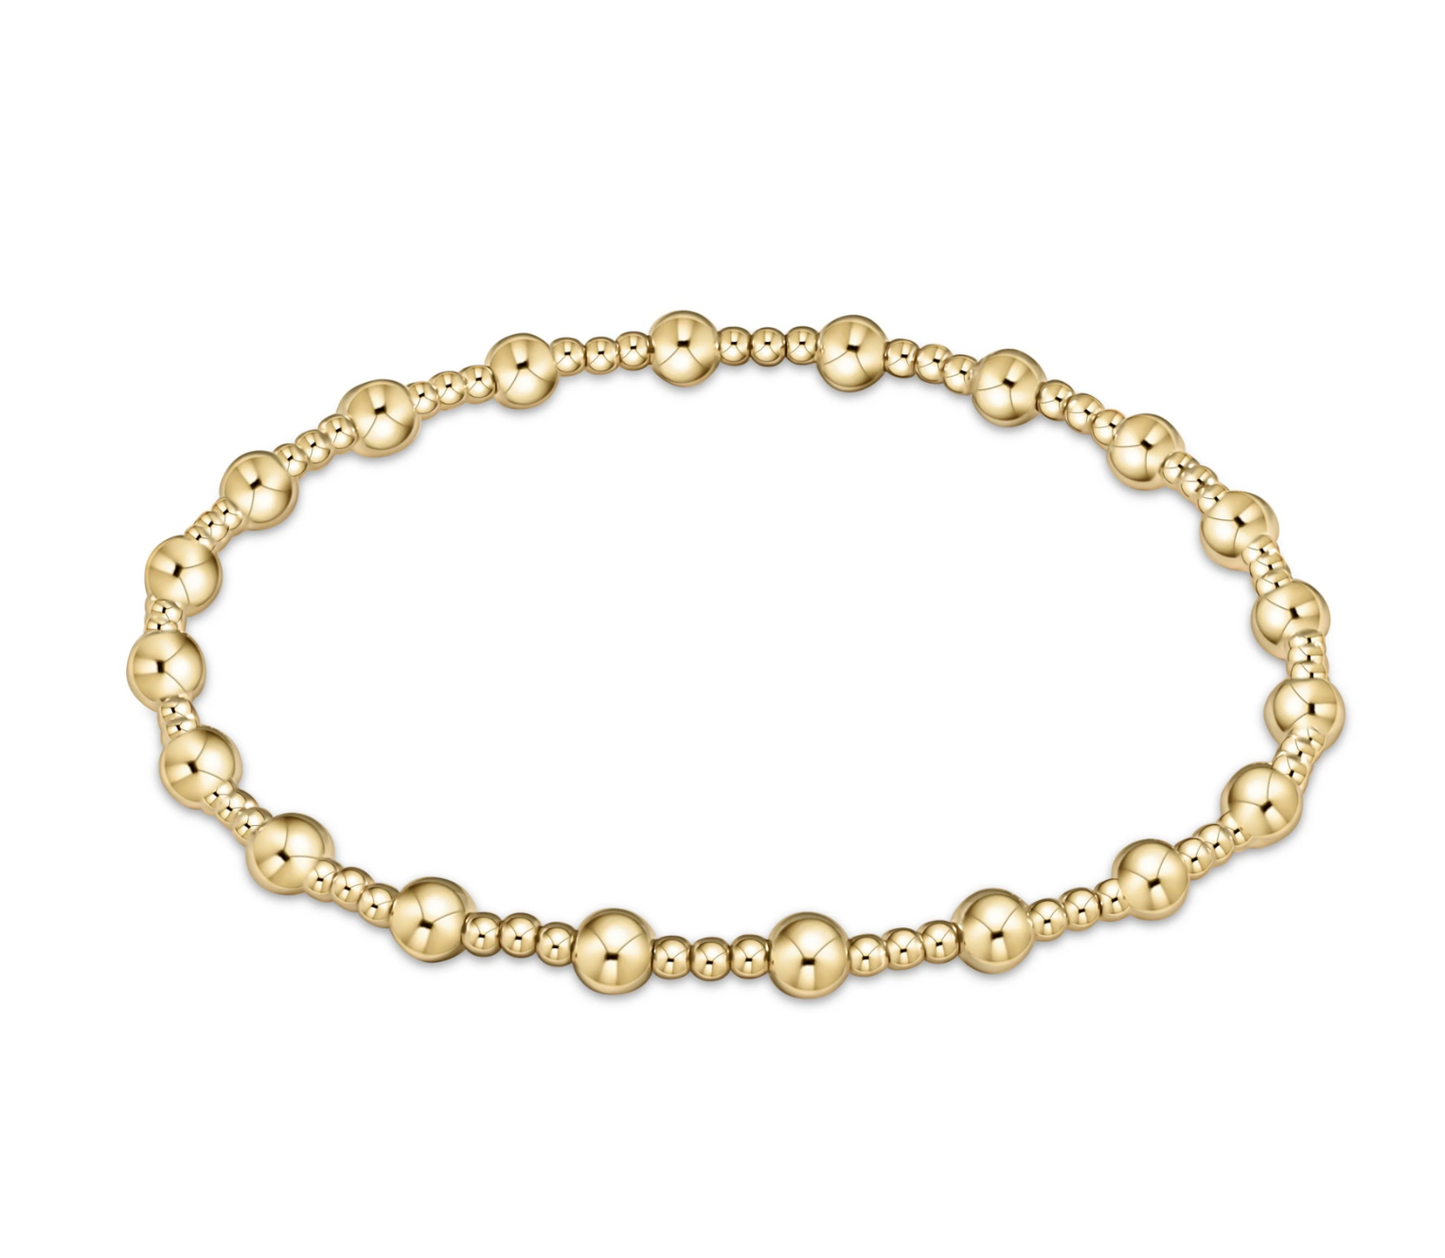 enewton extends - classic sincerity pattern 4mm bead bracelet - gold